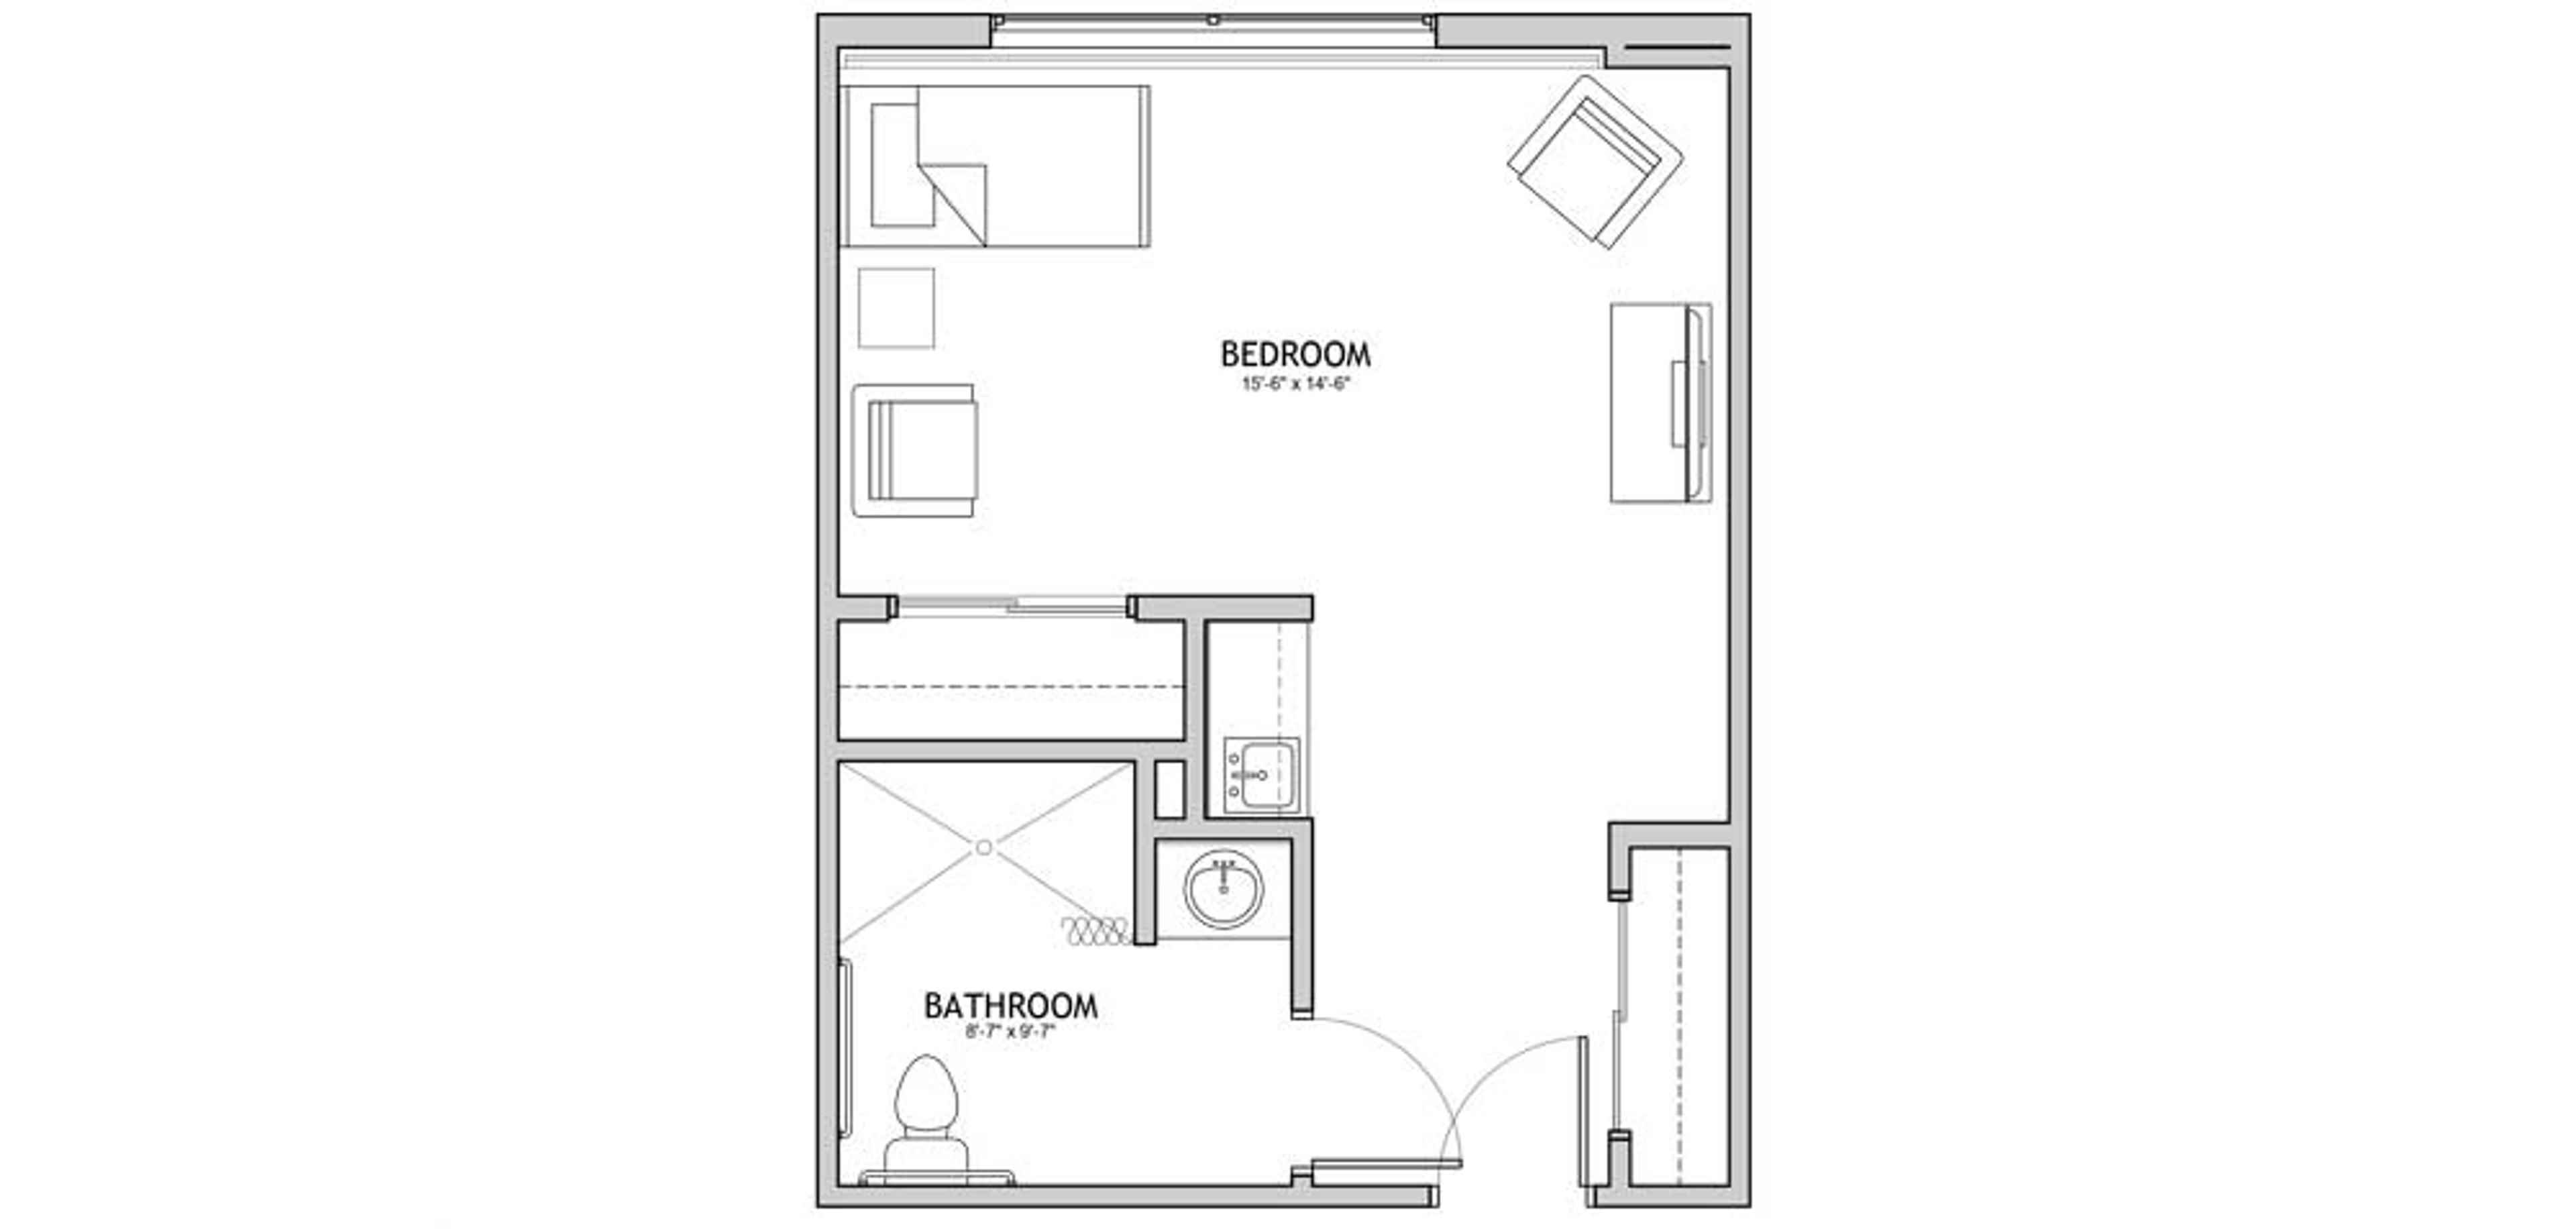 Floorplan - The Auberge at Oak Village - 1 bed, 1 bath, 443 sq. ft. Memory Care